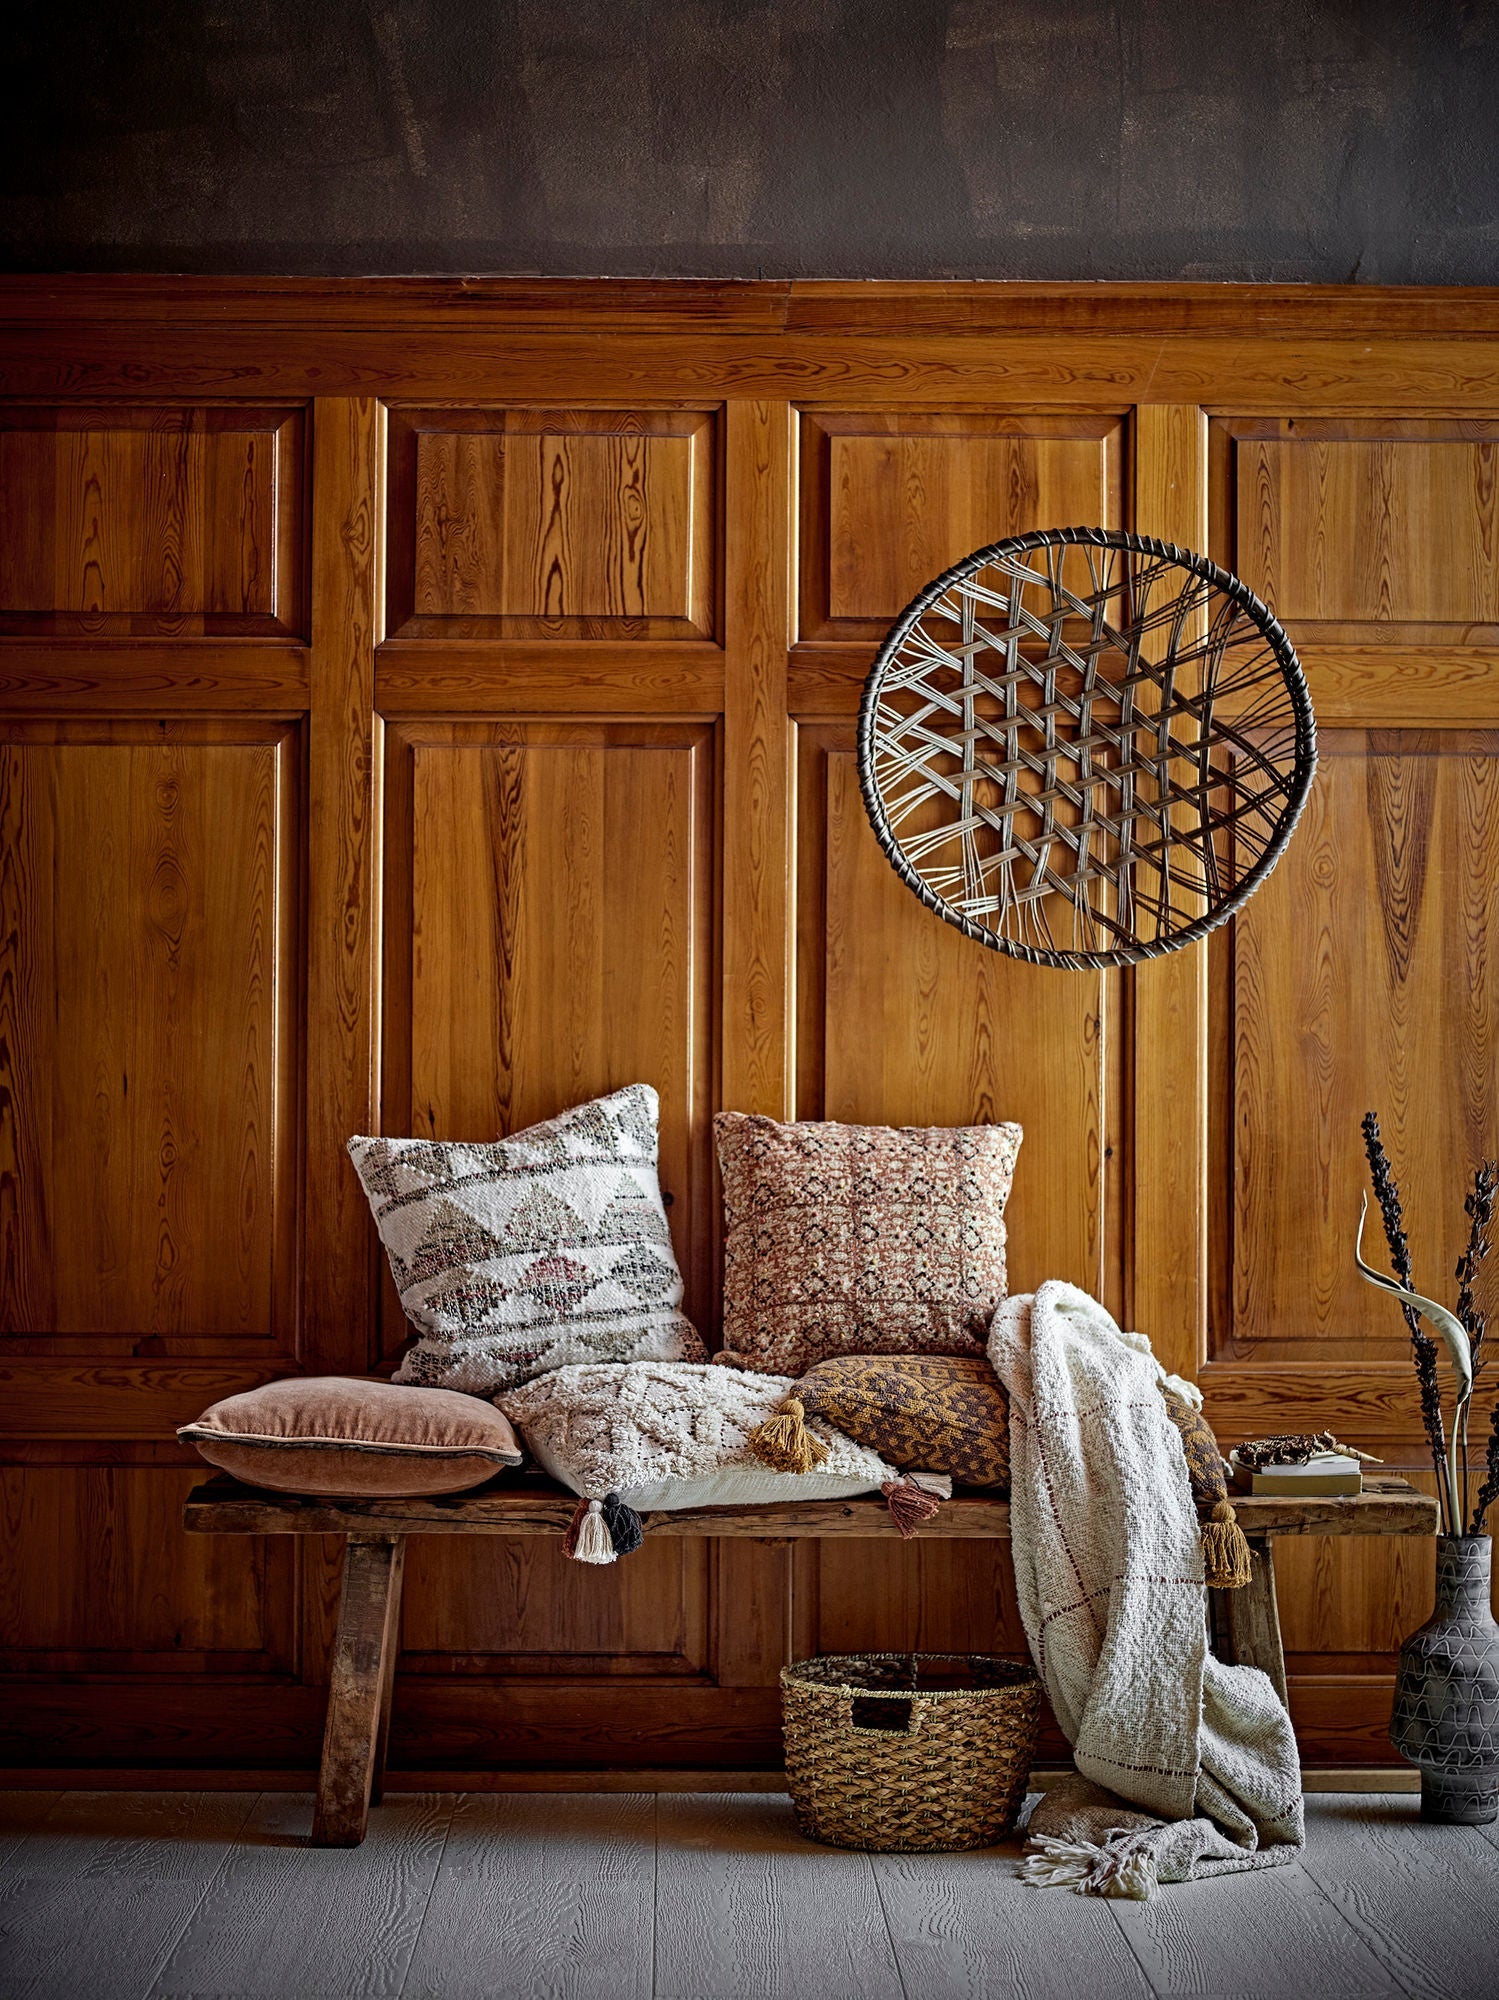 Creative Collection Aurial Cushion, Brown, Cotton